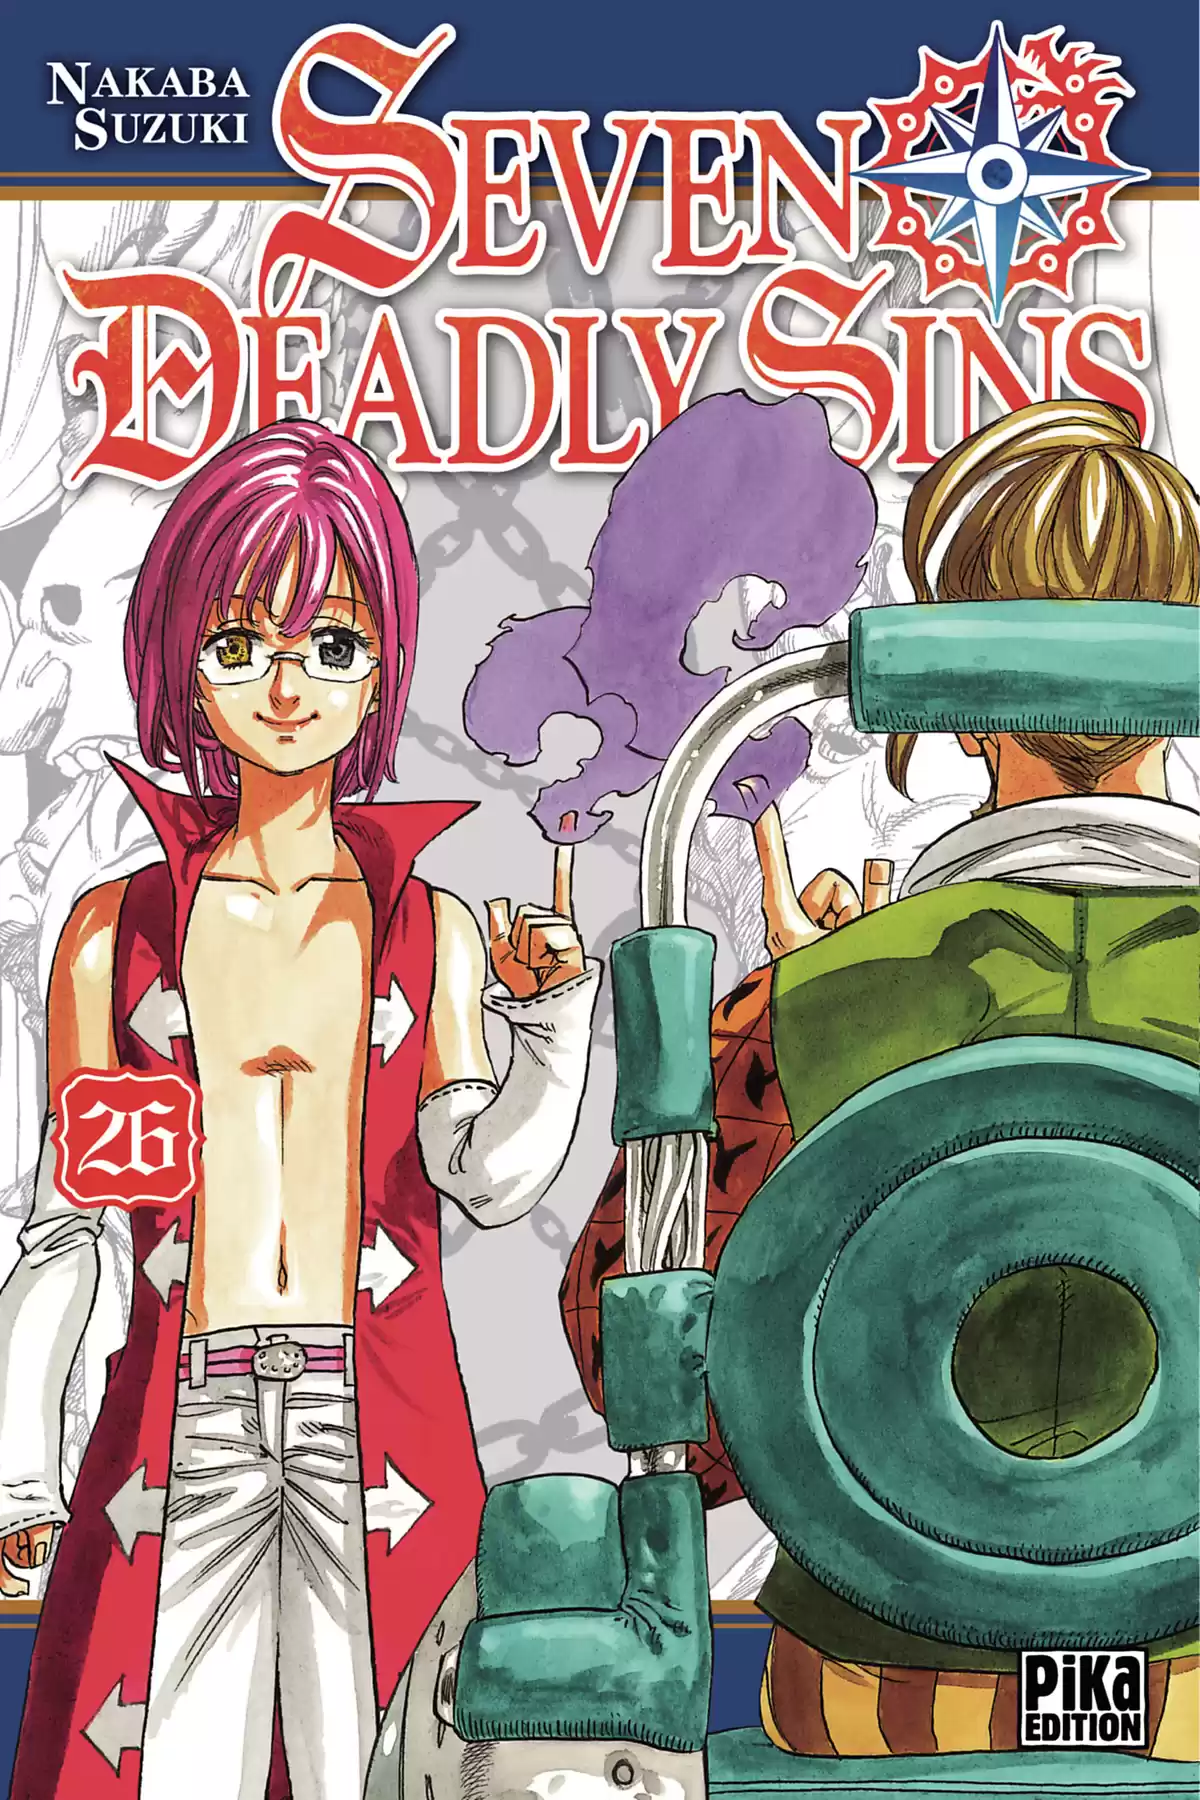 Seven Deadly Sins Volume 26 page 1